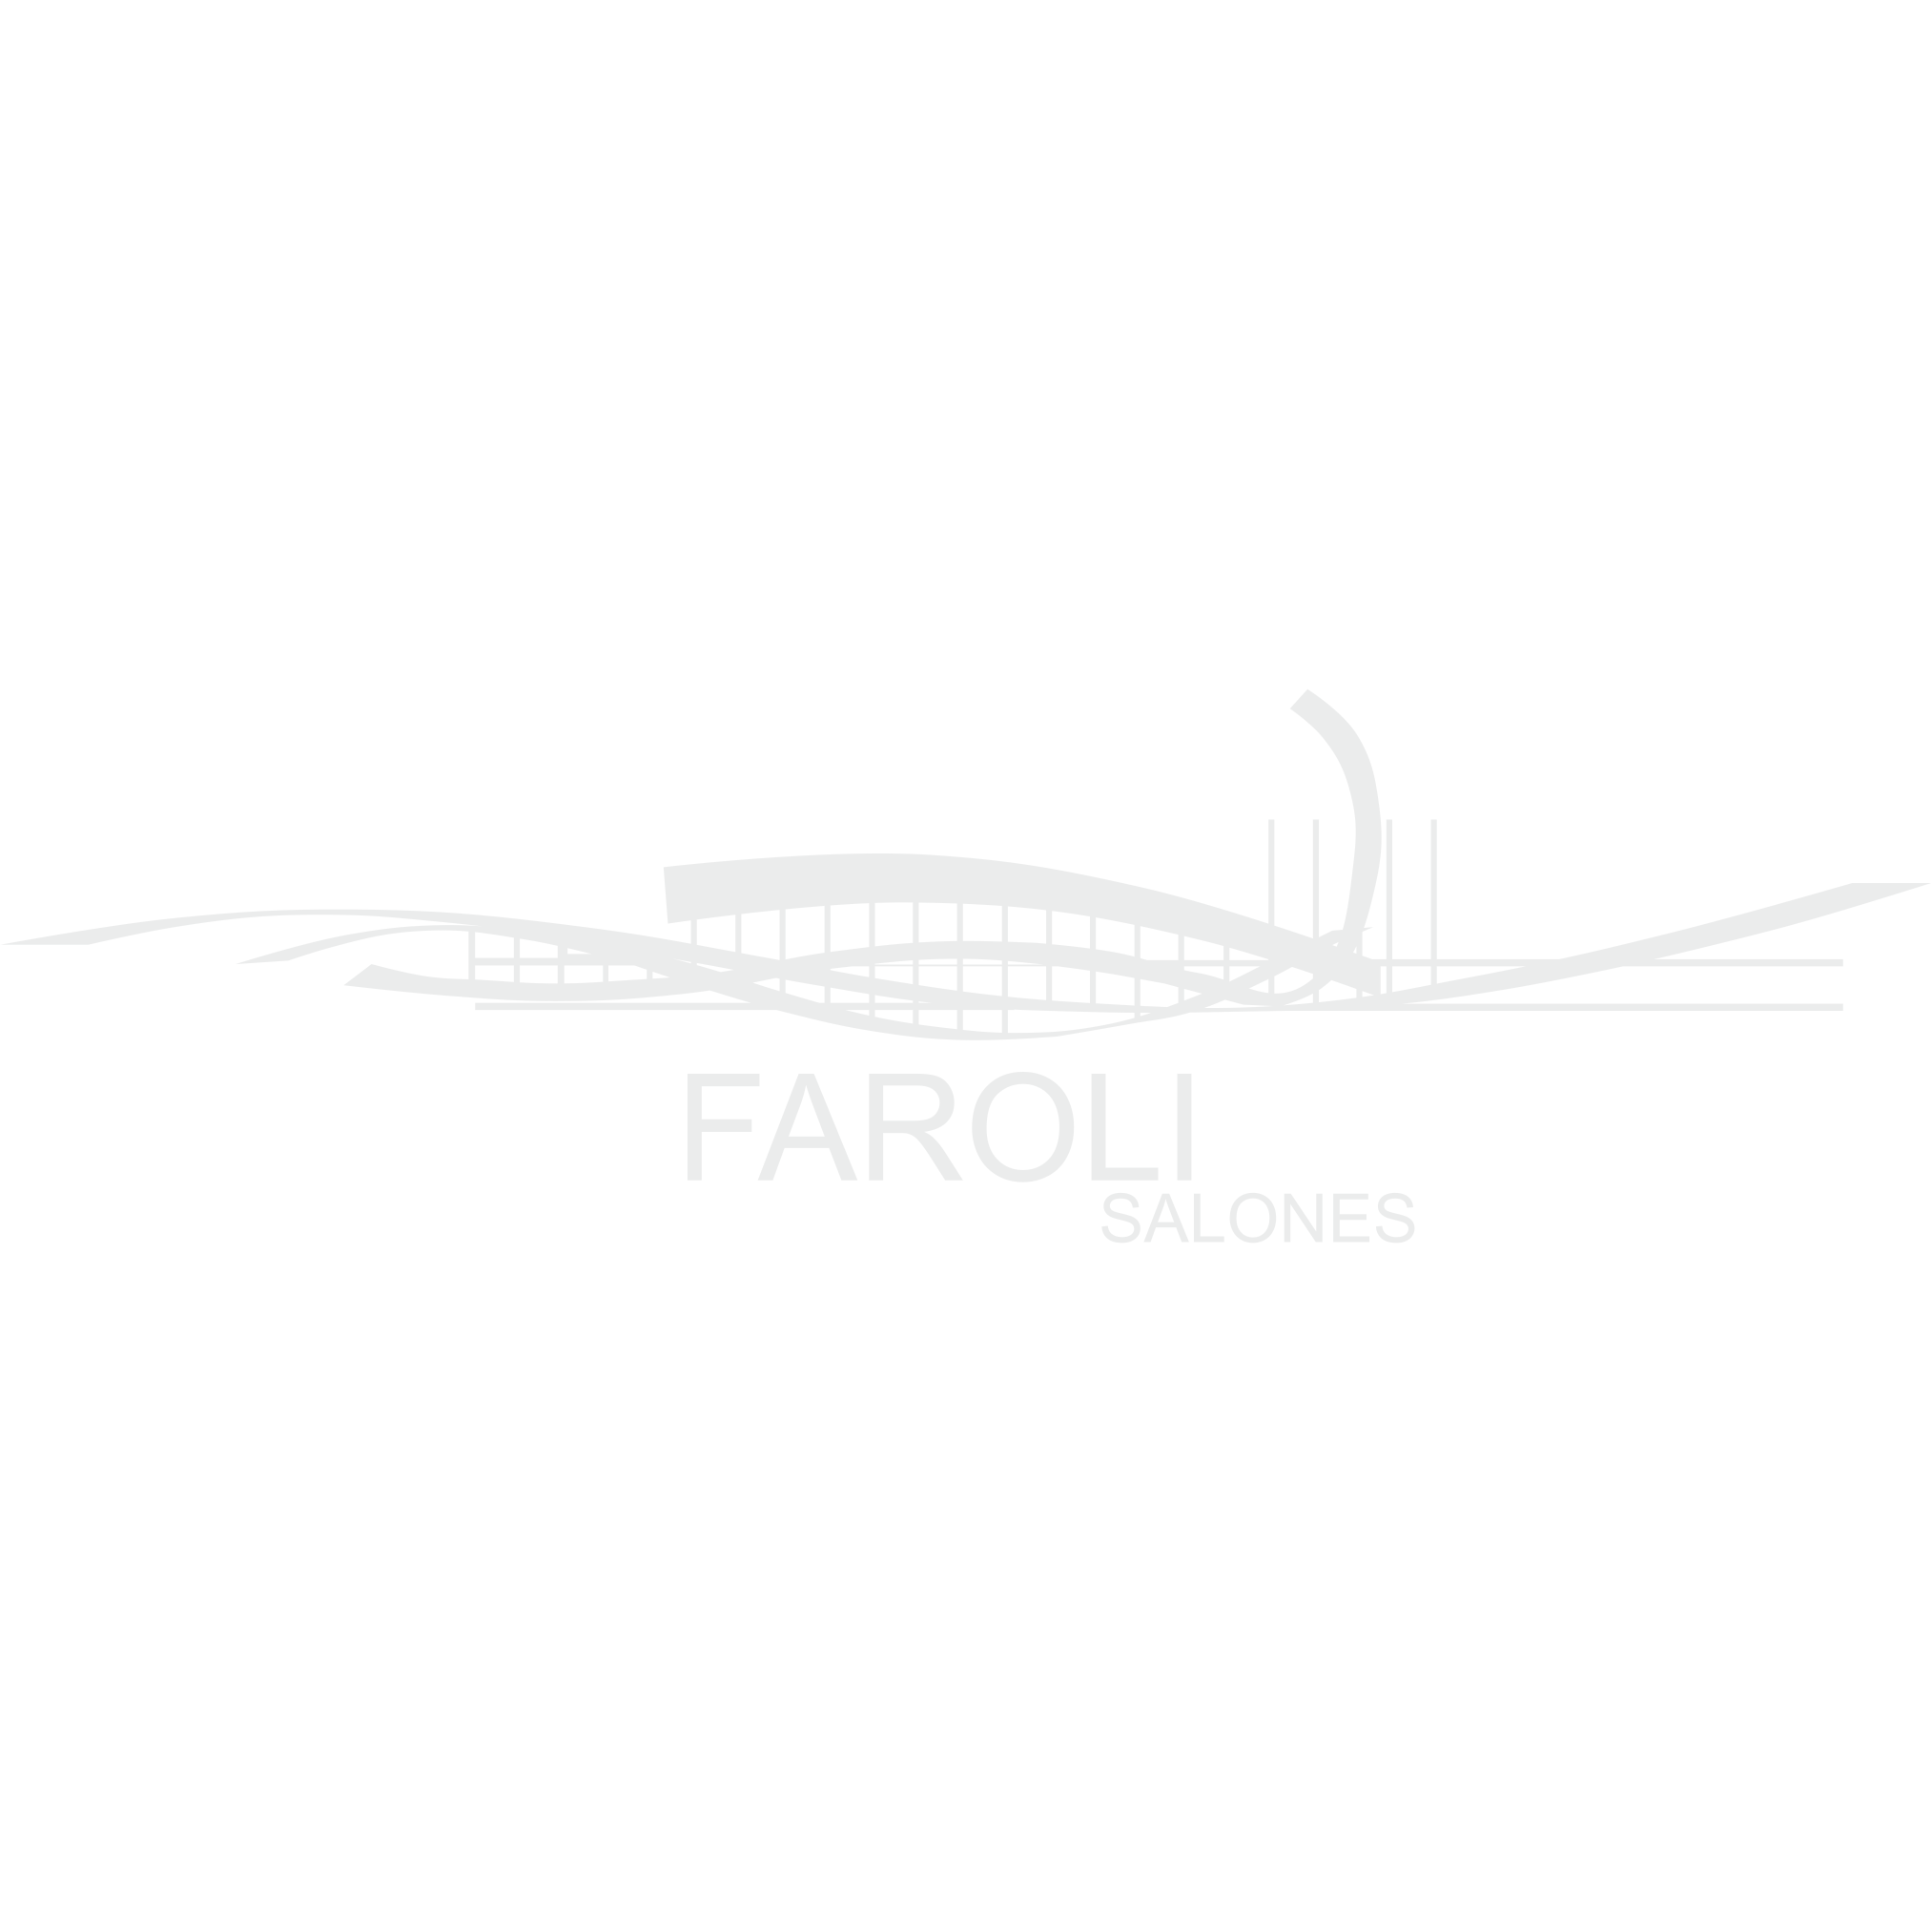 El Faroli Logo